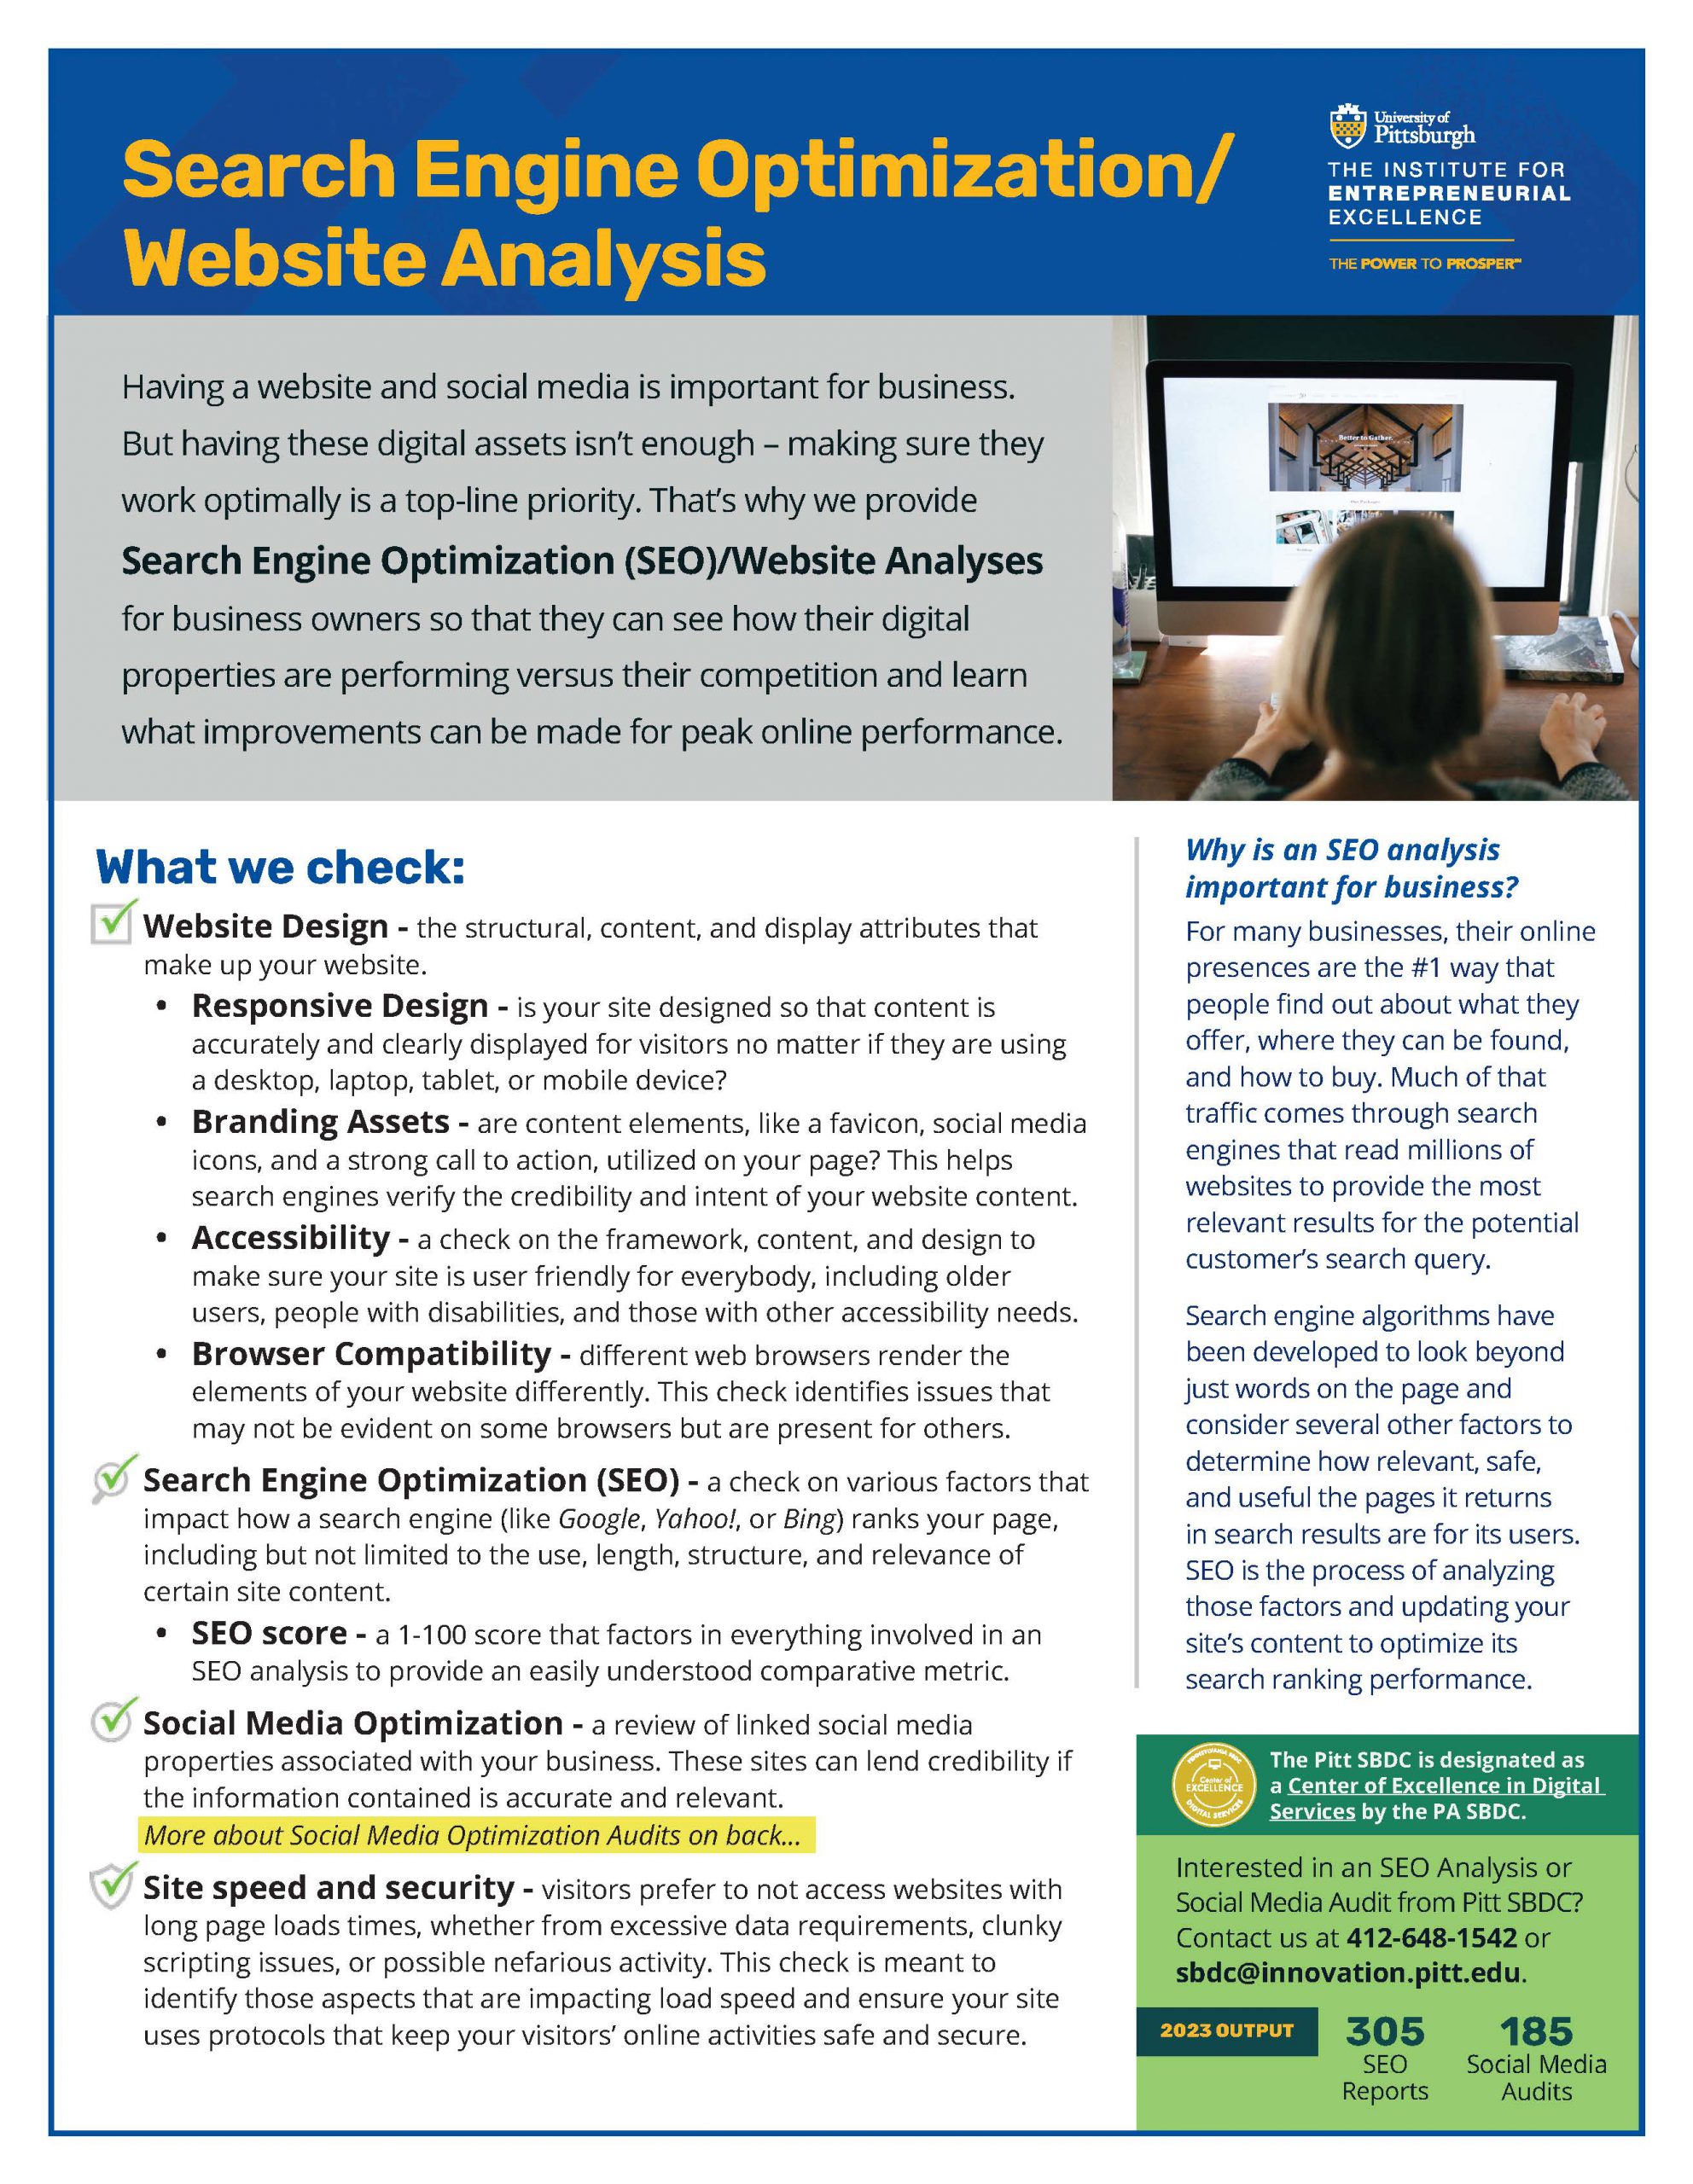 Pitt SBDC Search Engine Optimization (SEO) and Social Media Audit flyer